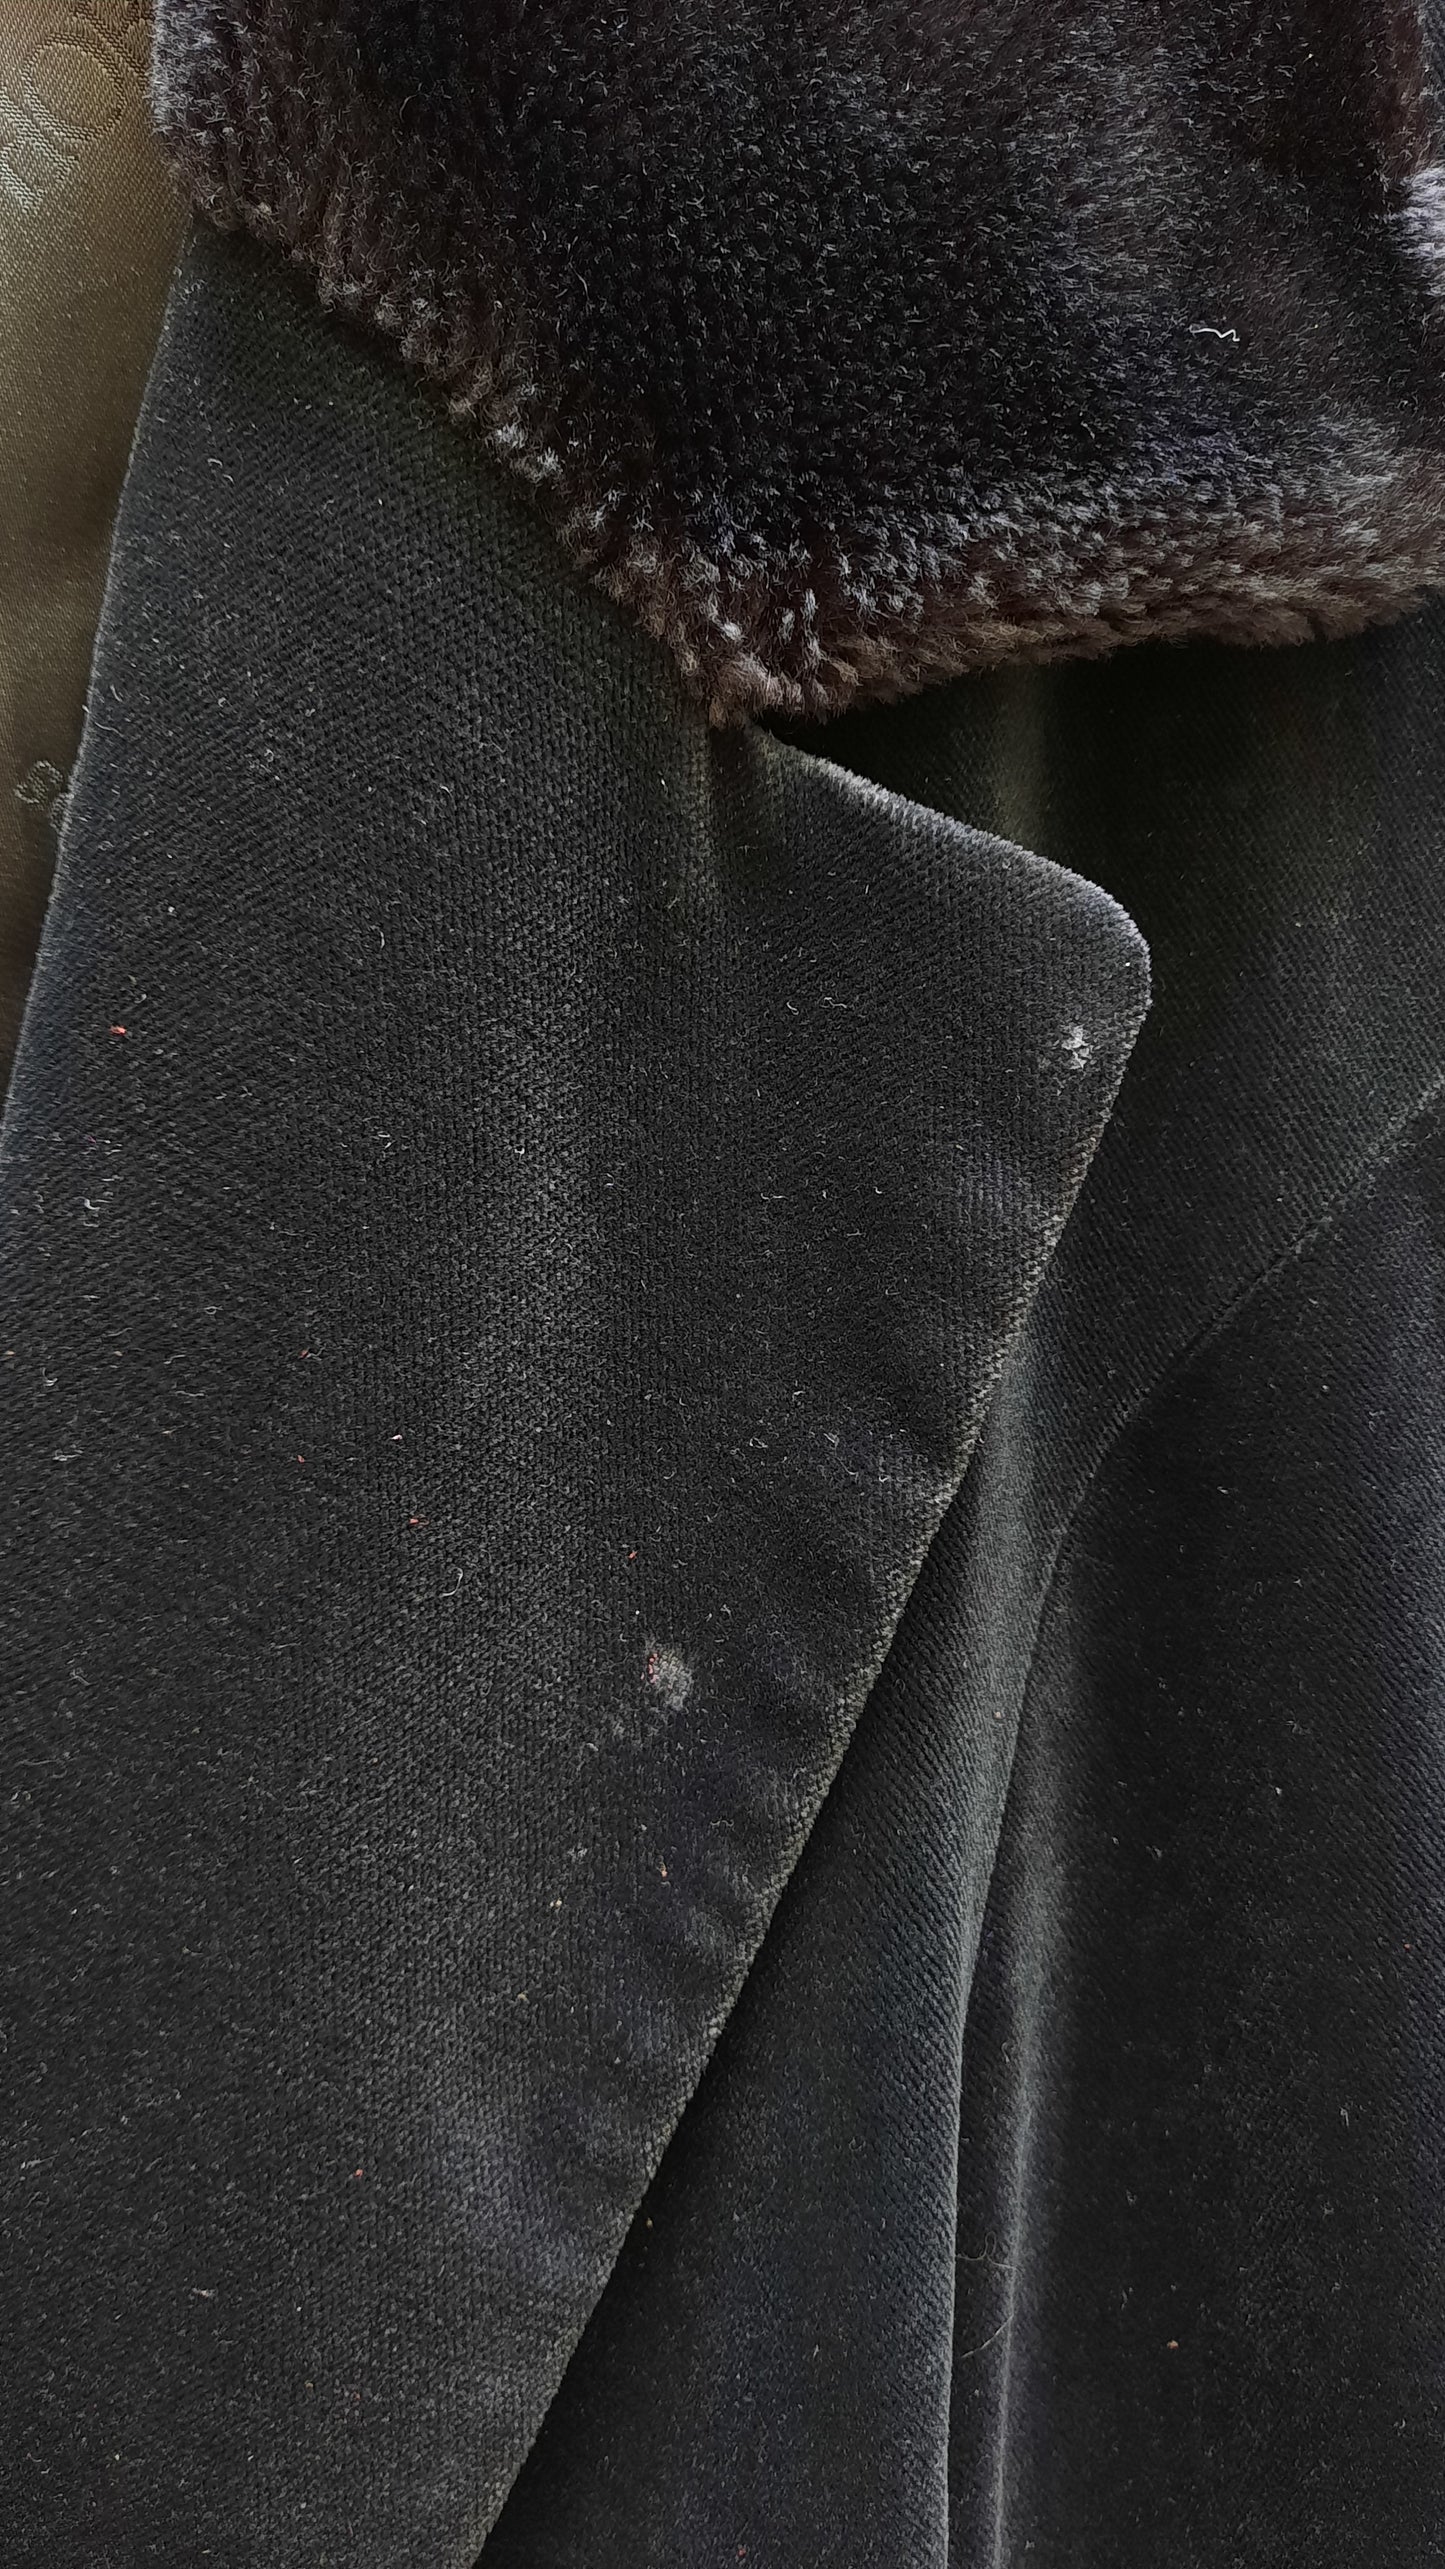 Vintage Black Velvet Faux Fur Collar "Hobbs" Coat